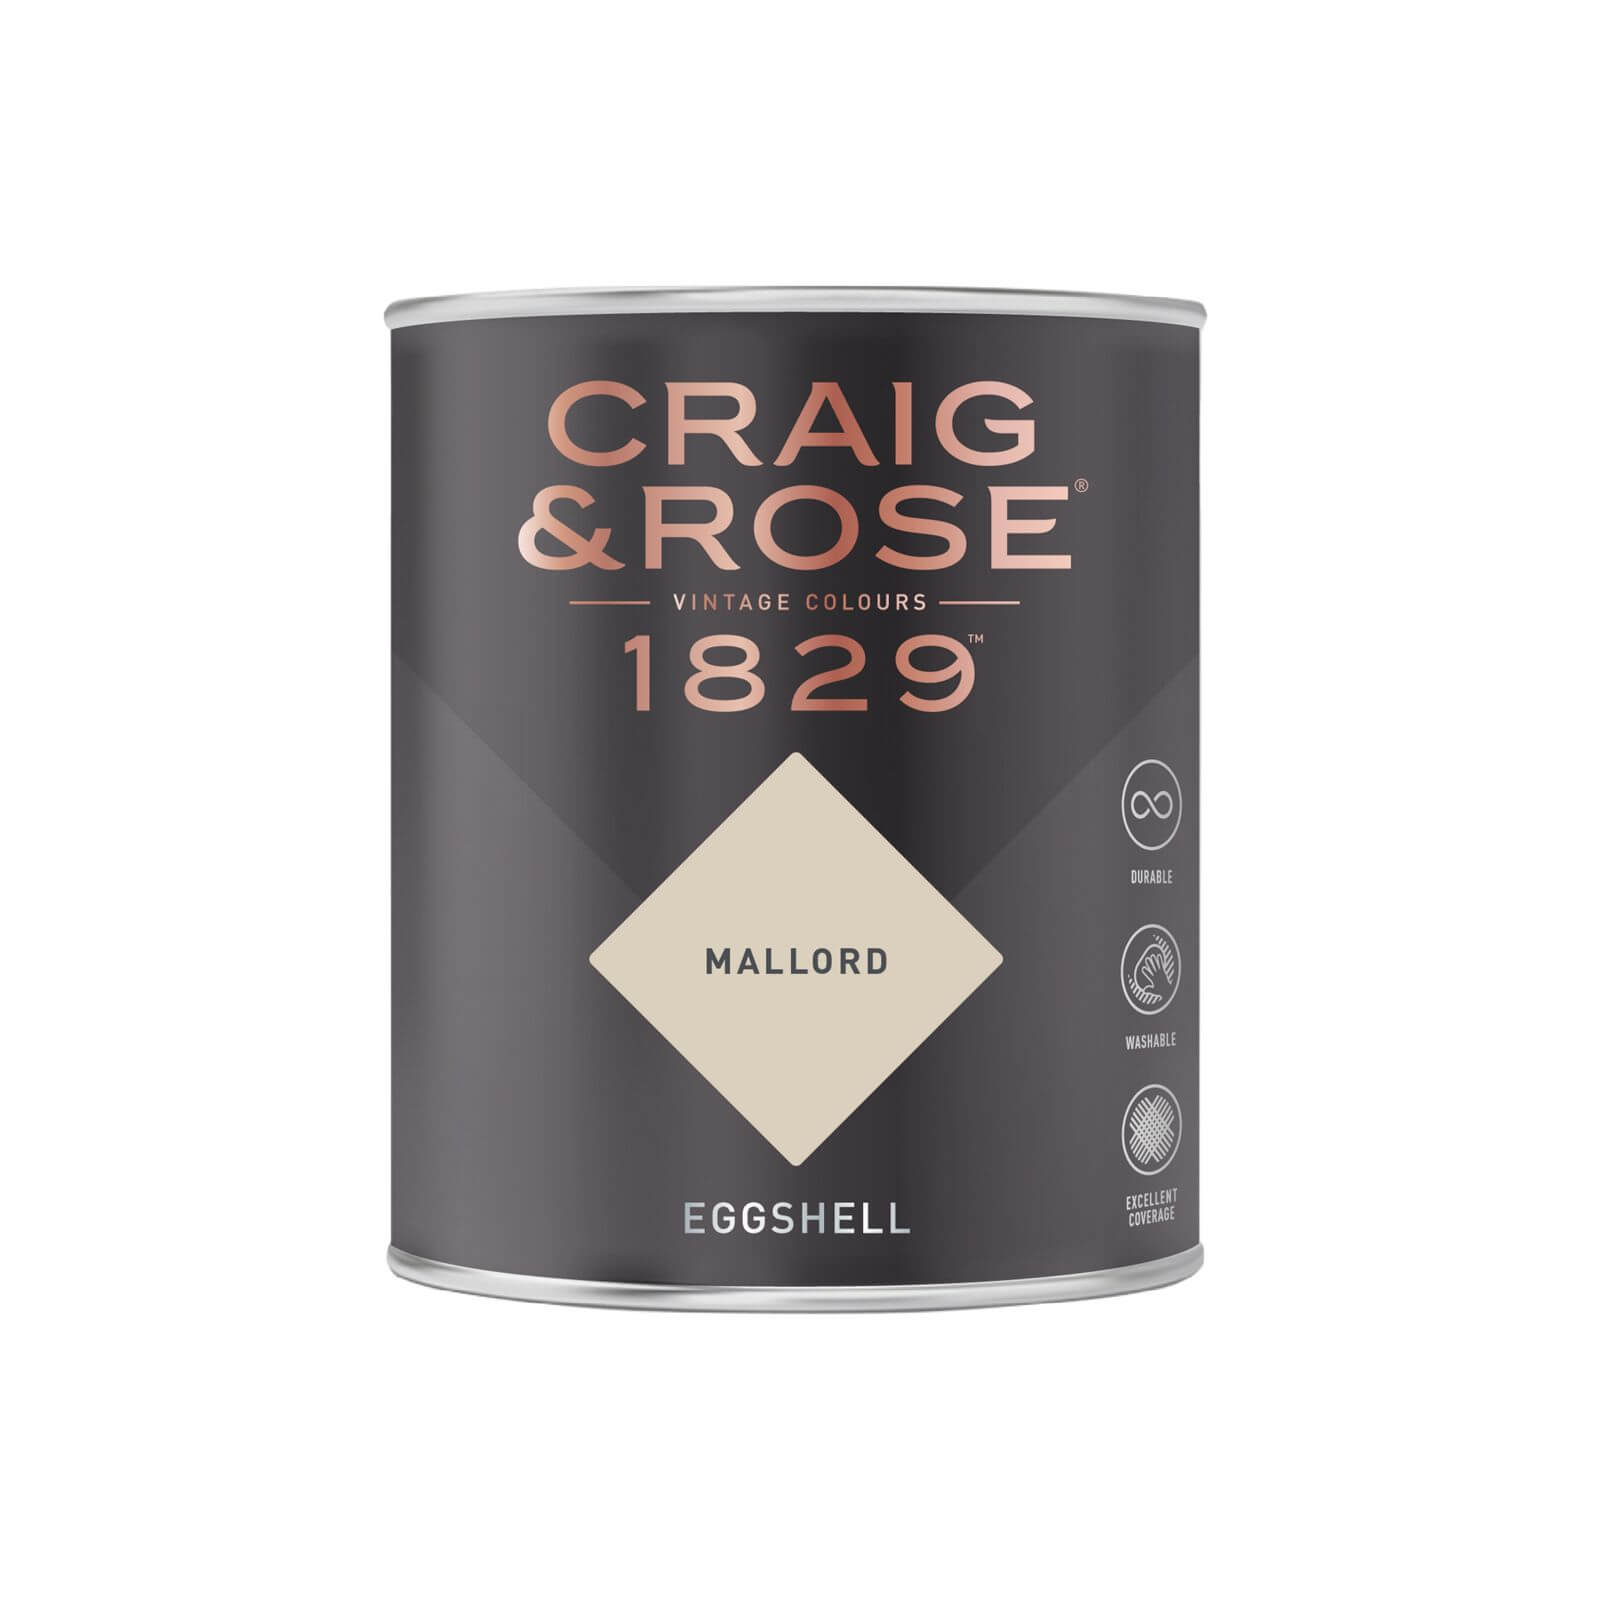 Craig & Rose 1829 Eggshell Paint Mallord - 750ml